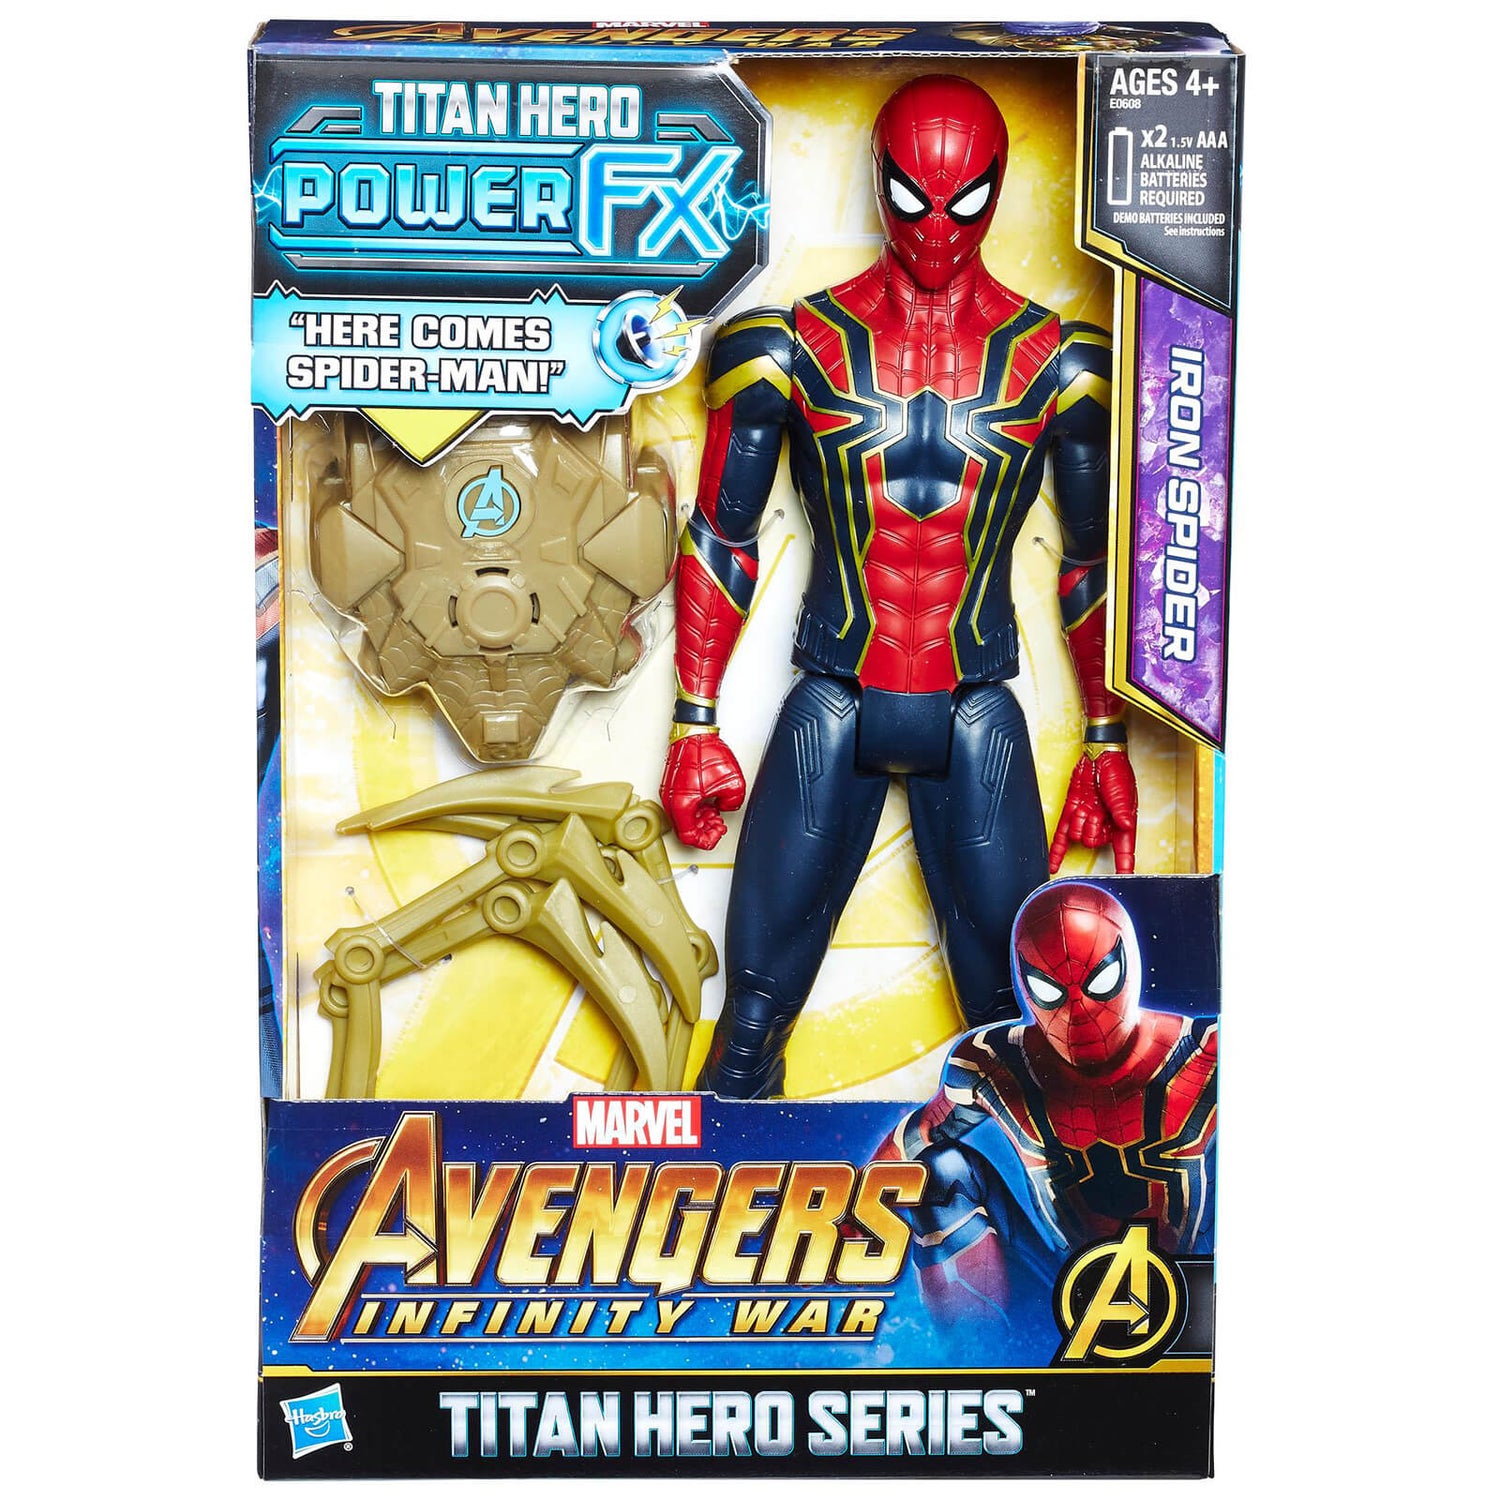 Avengers: Infinity War Titan Hero Power FX Star-Lord Action Figure